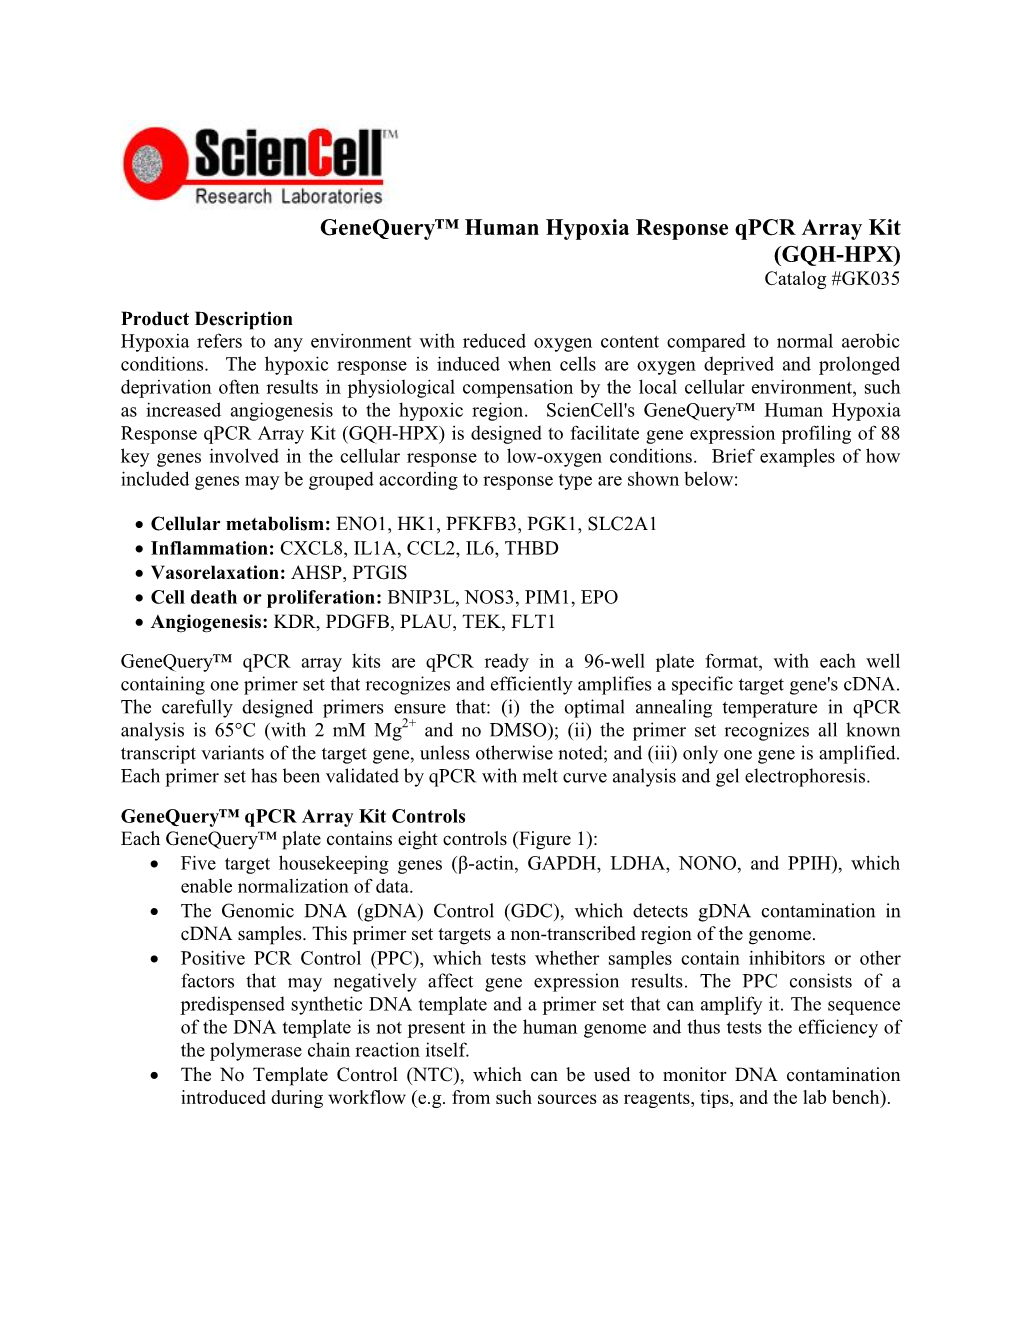 Genequery™ Human Hypoxia Response Qpcr Array Kit (GQH-HPX) Catalog #GK035